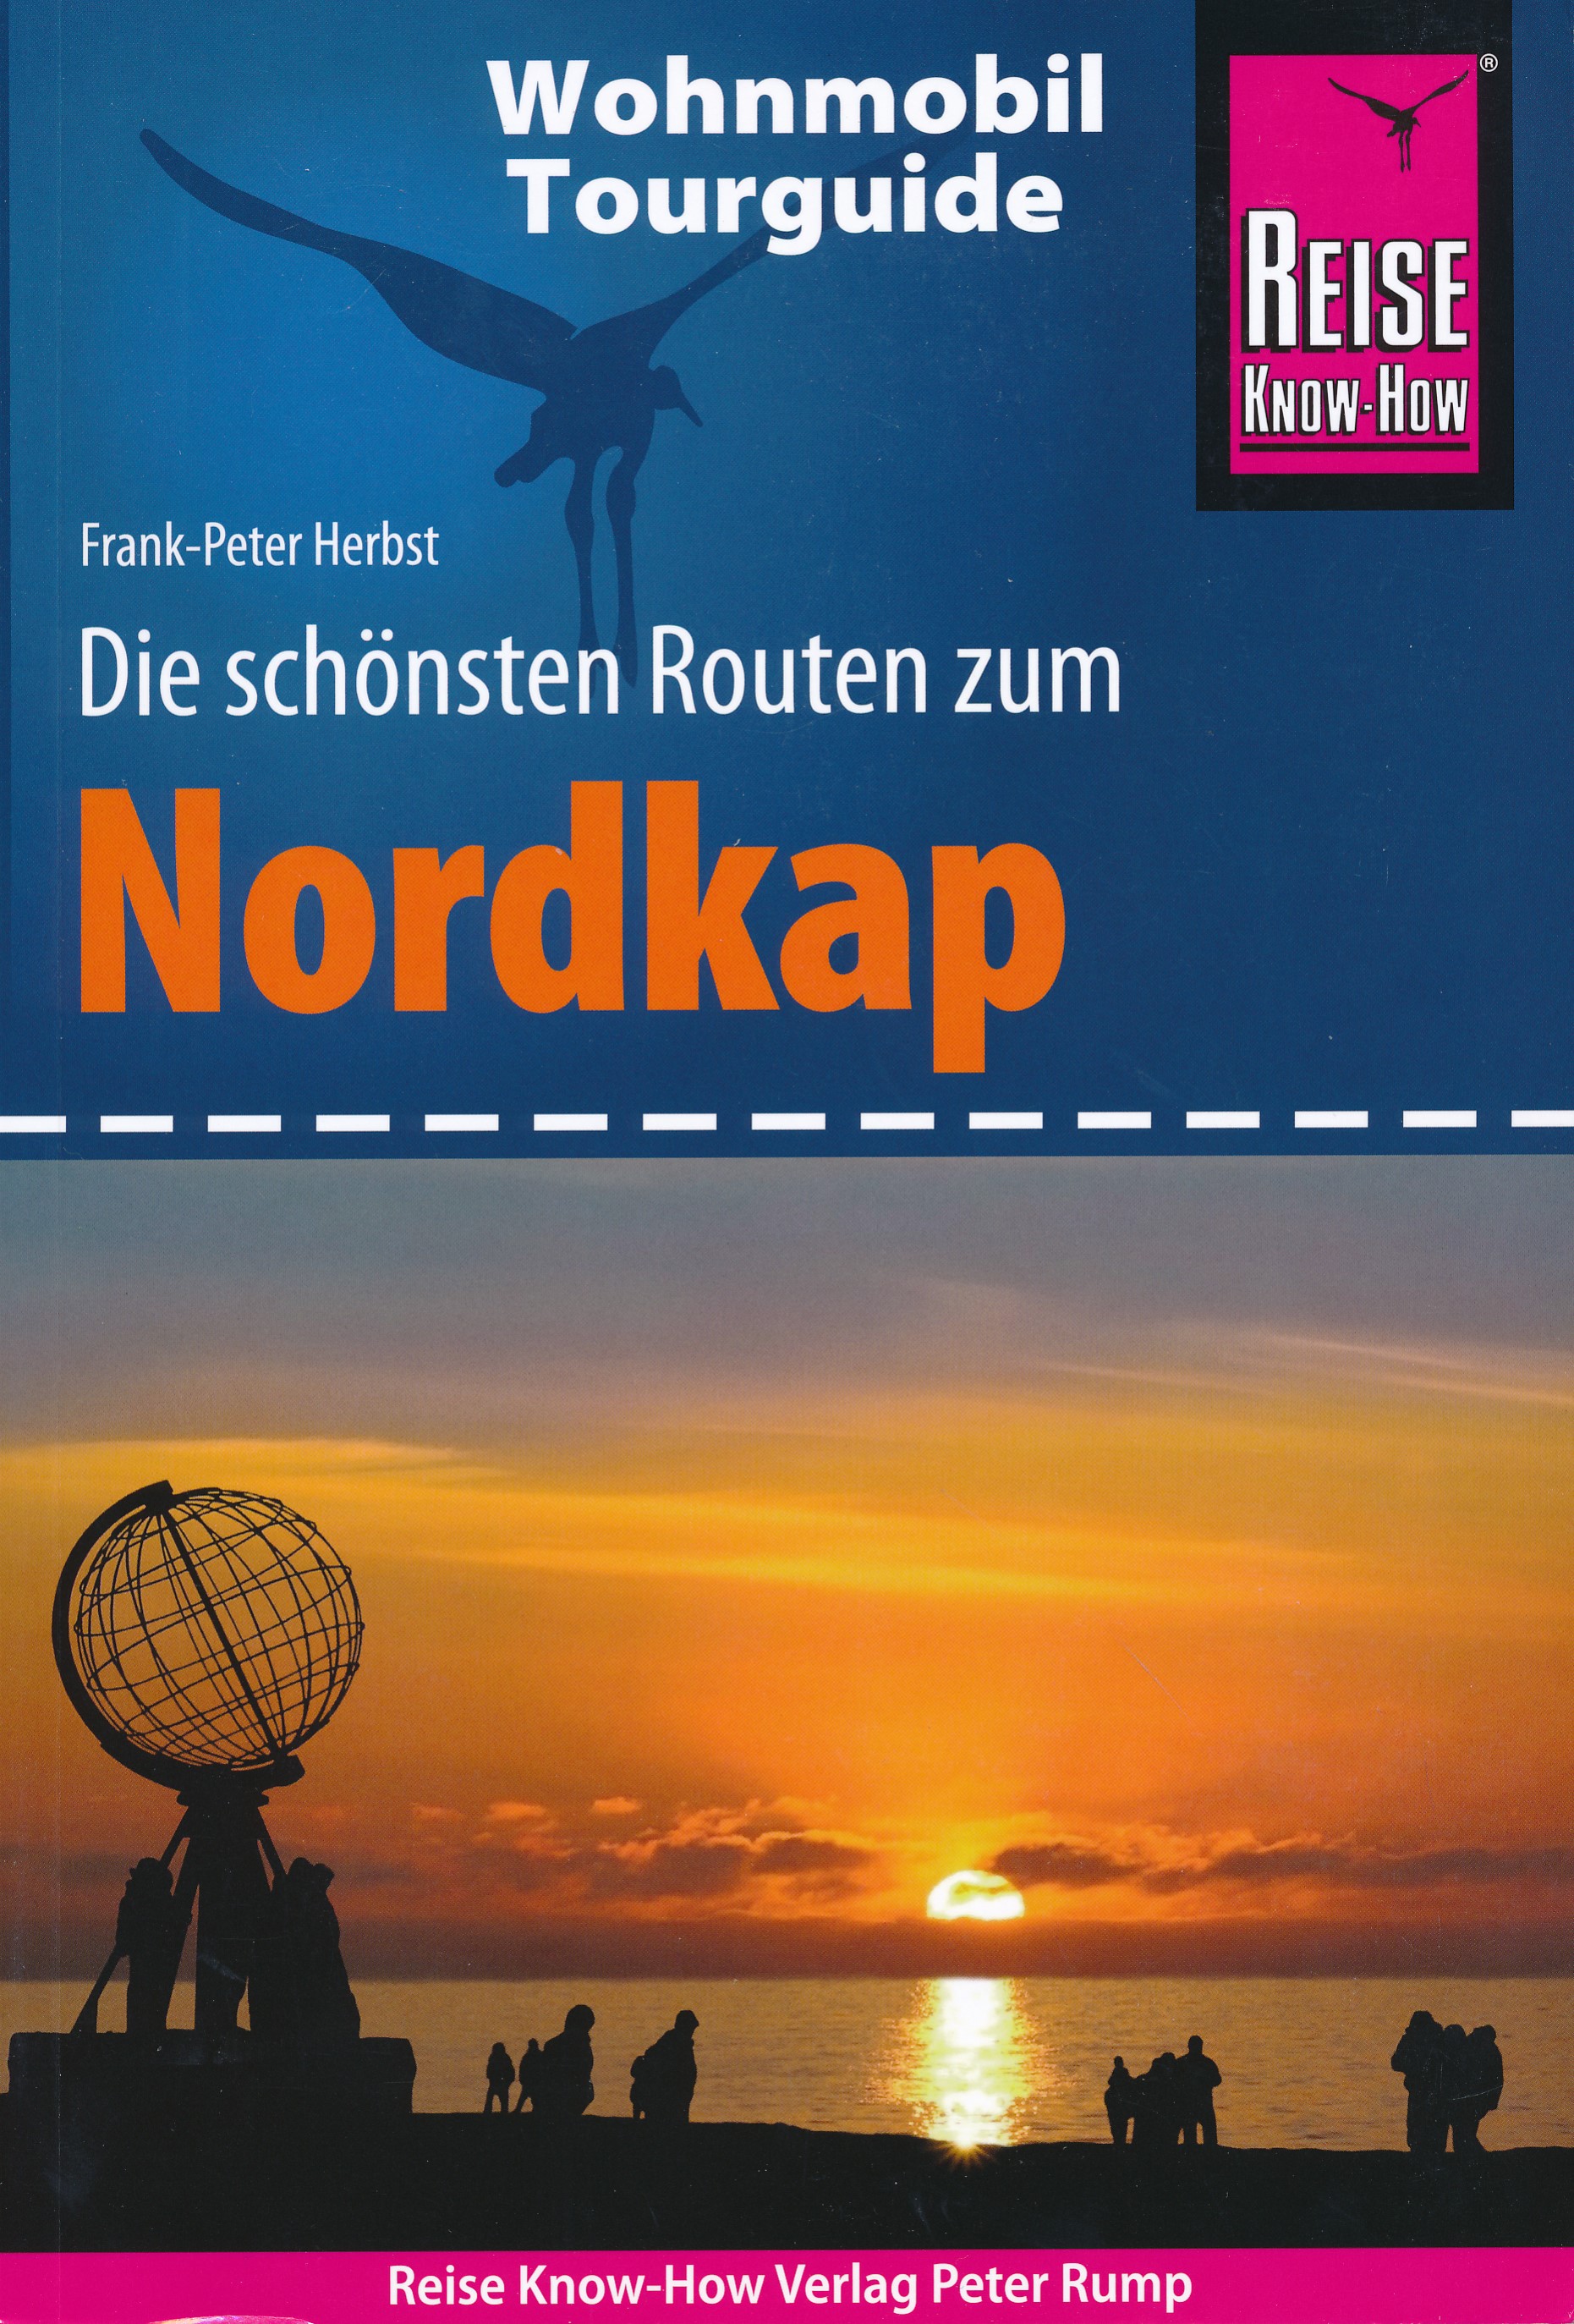 Online bestellen: Campergids - Reisgids Wohnmobil-Tourguide Nordkap - Noordkaap | Reise Know-How Verlag